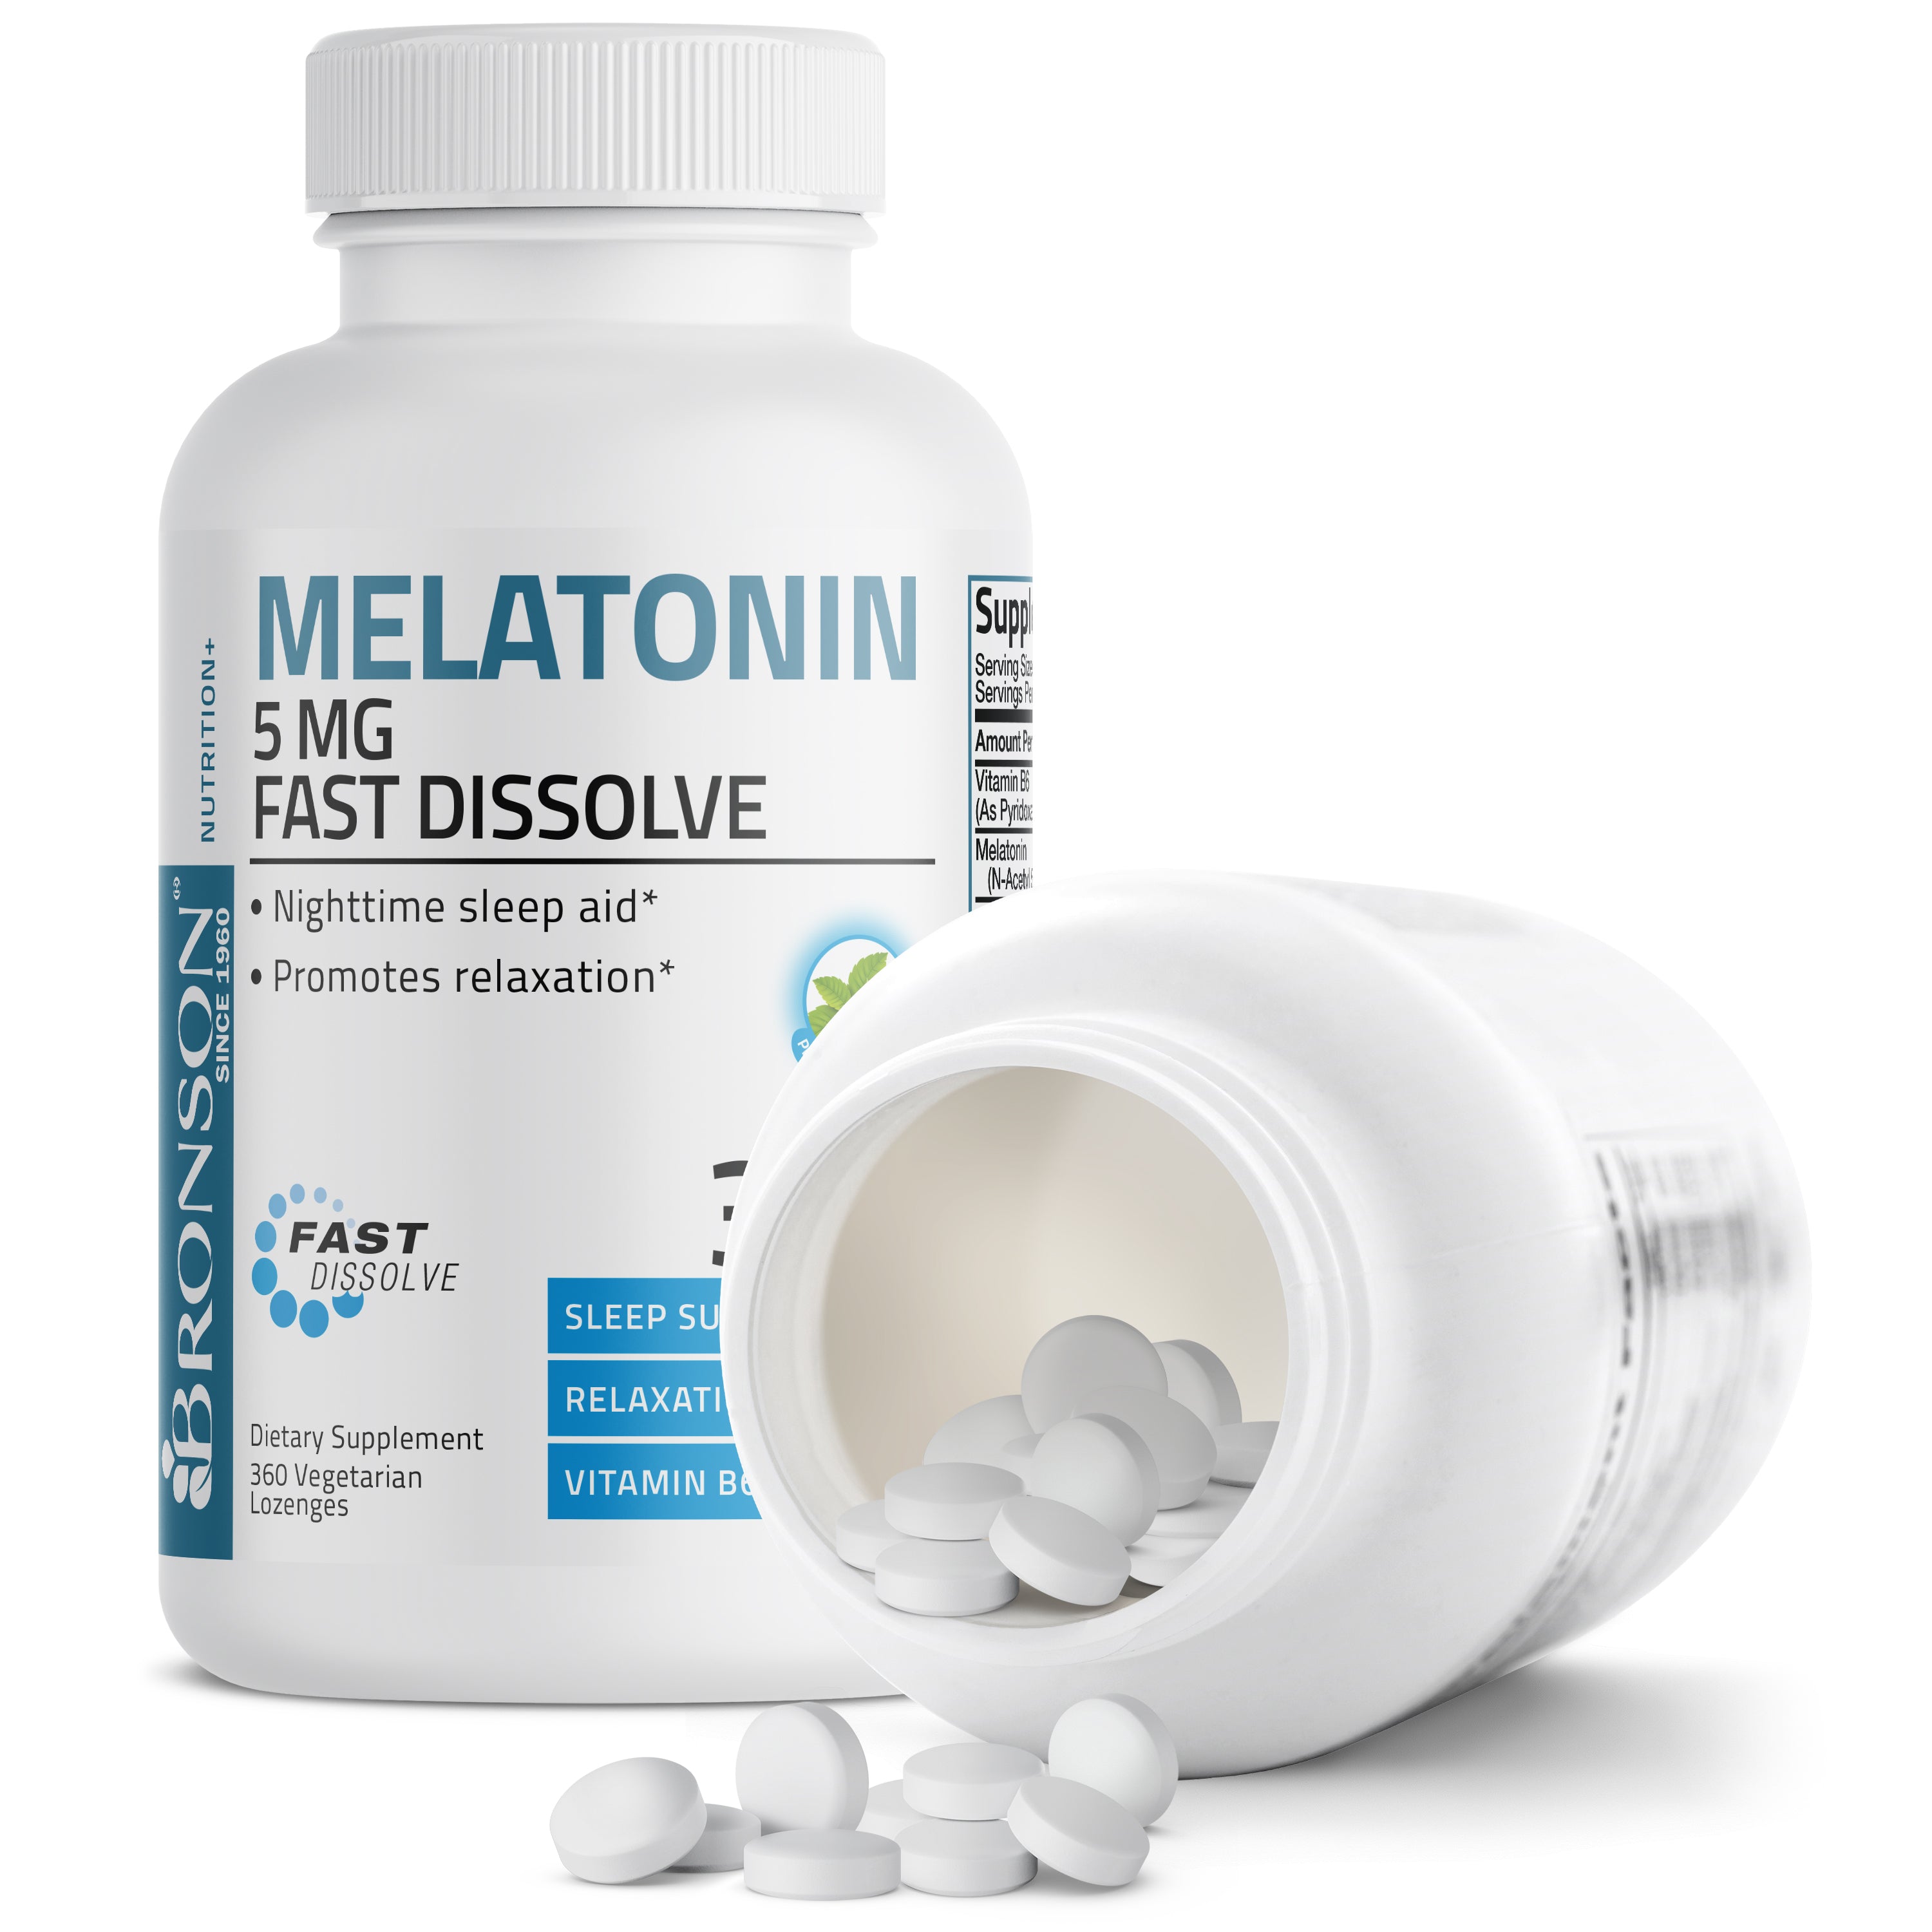 Melatonin Fast Dissolve - 5 mg - 360 Vegetarian Lozenges view 5 of 6